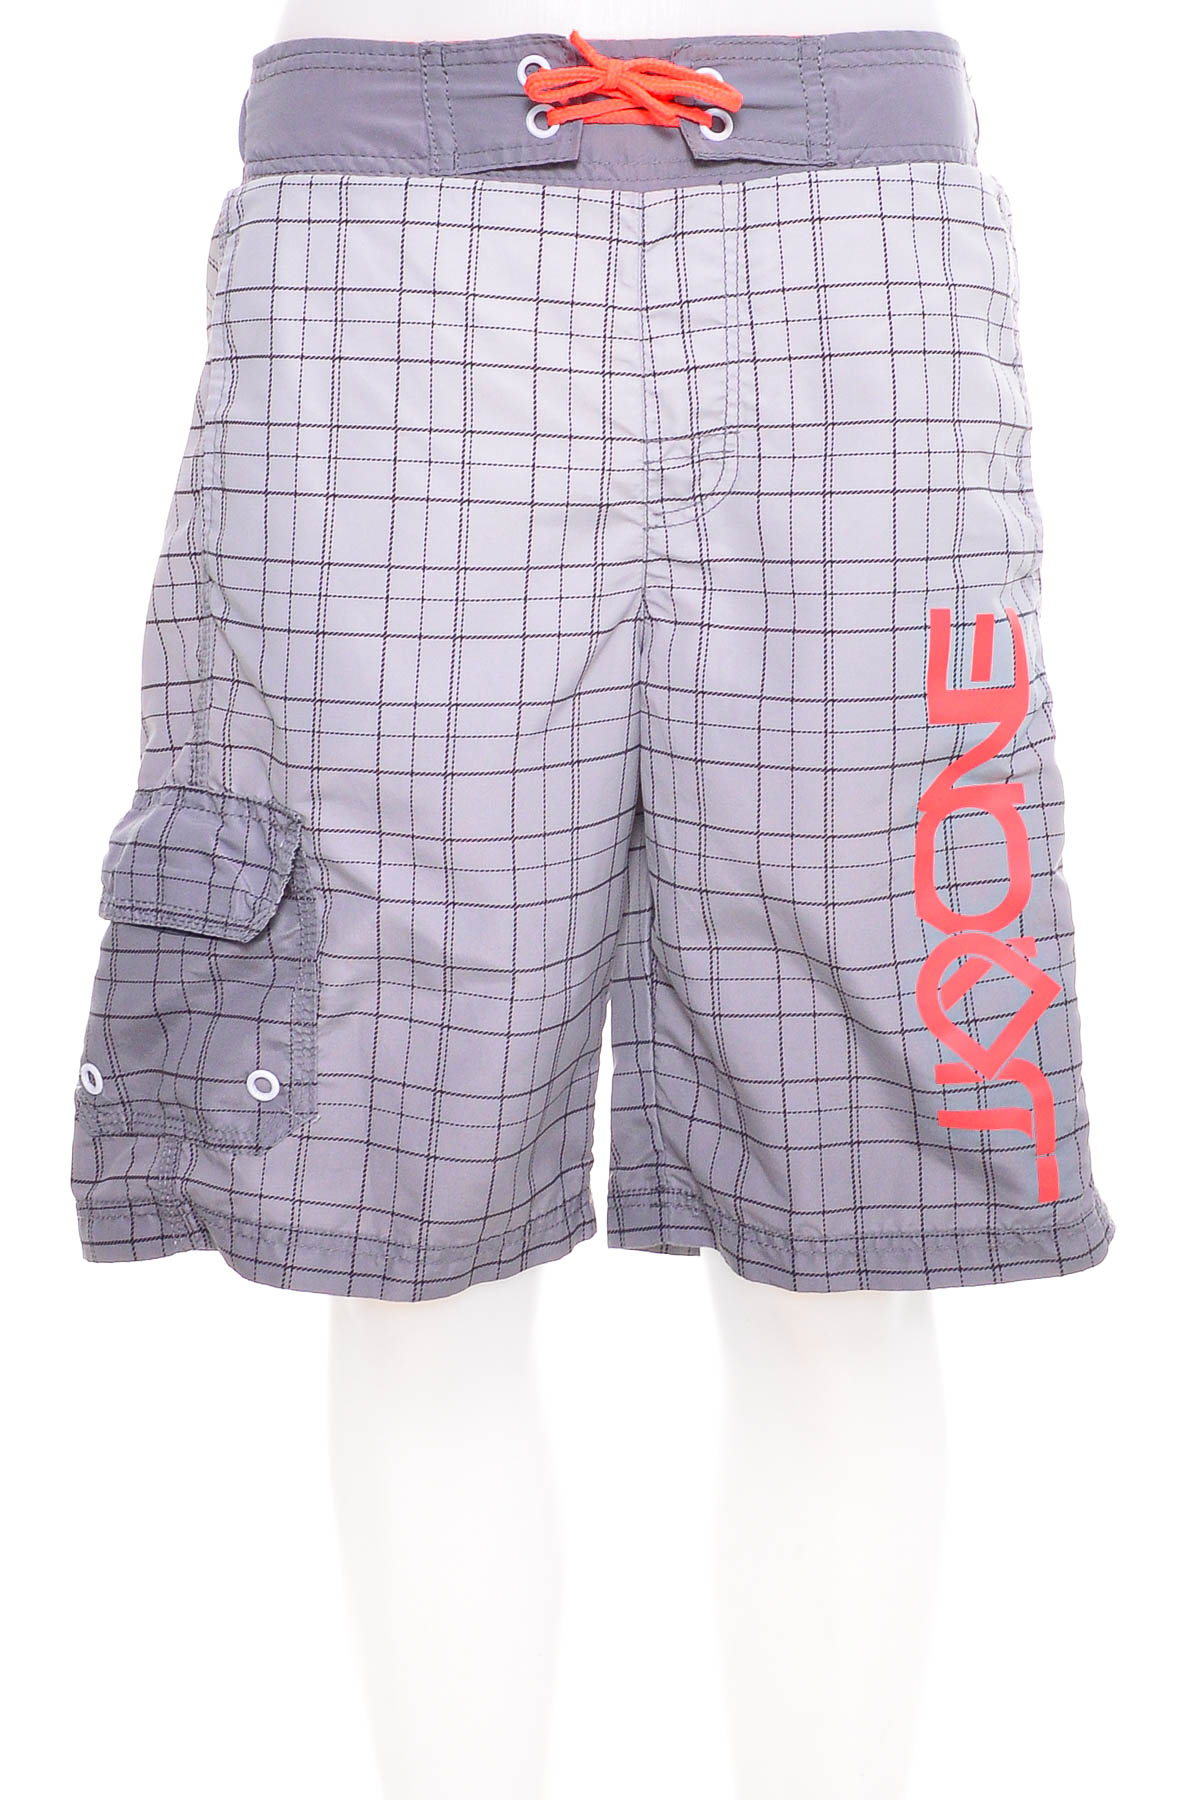 Men's shorts - Cool Beach - 0